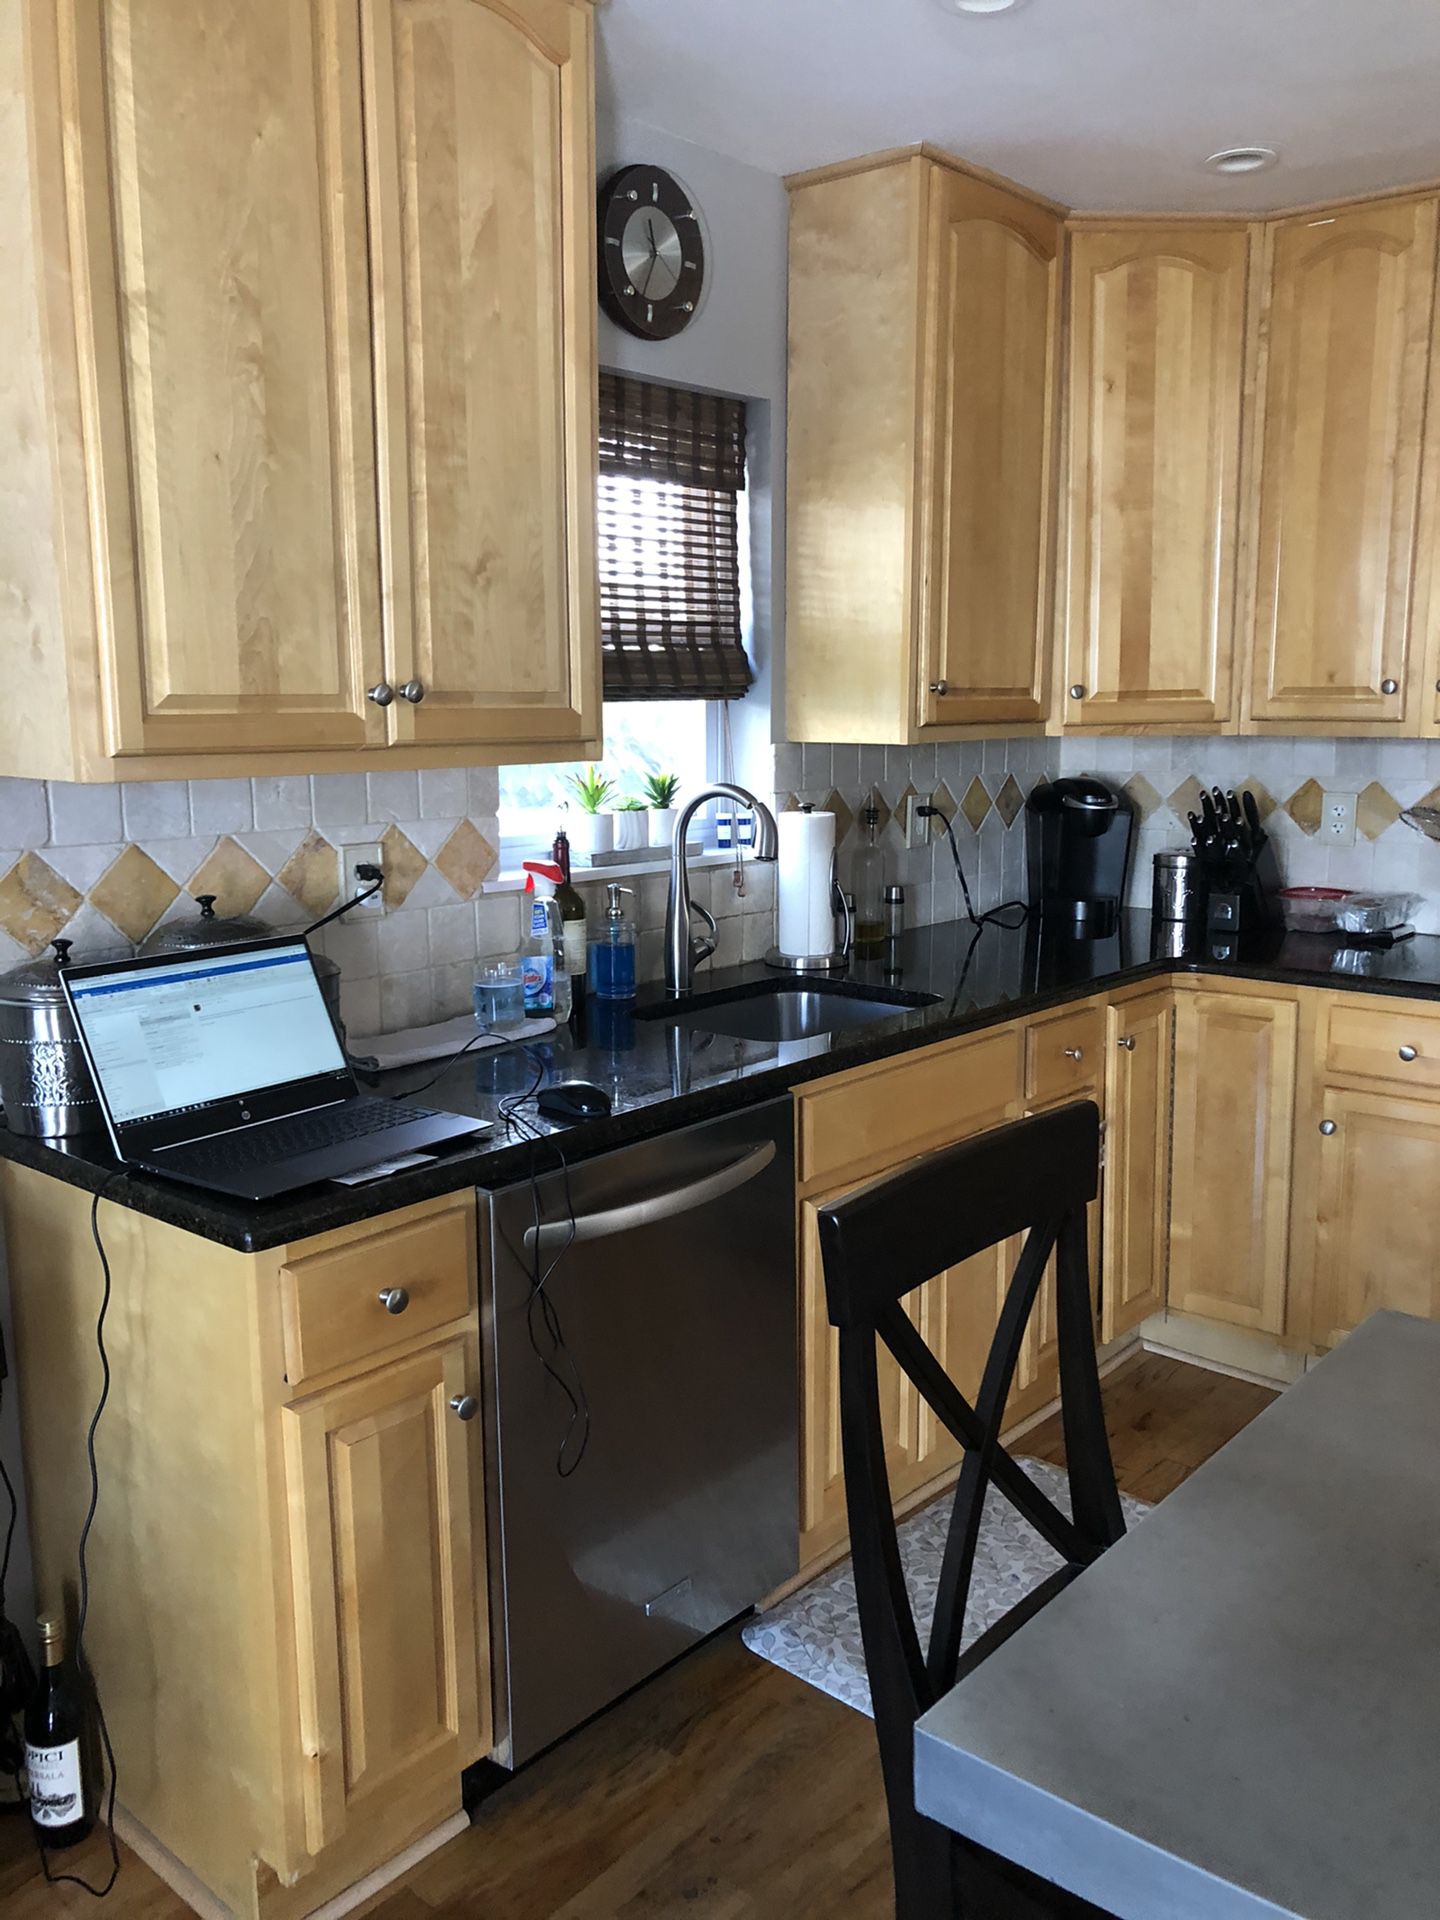 Kitchen cabinets and granite